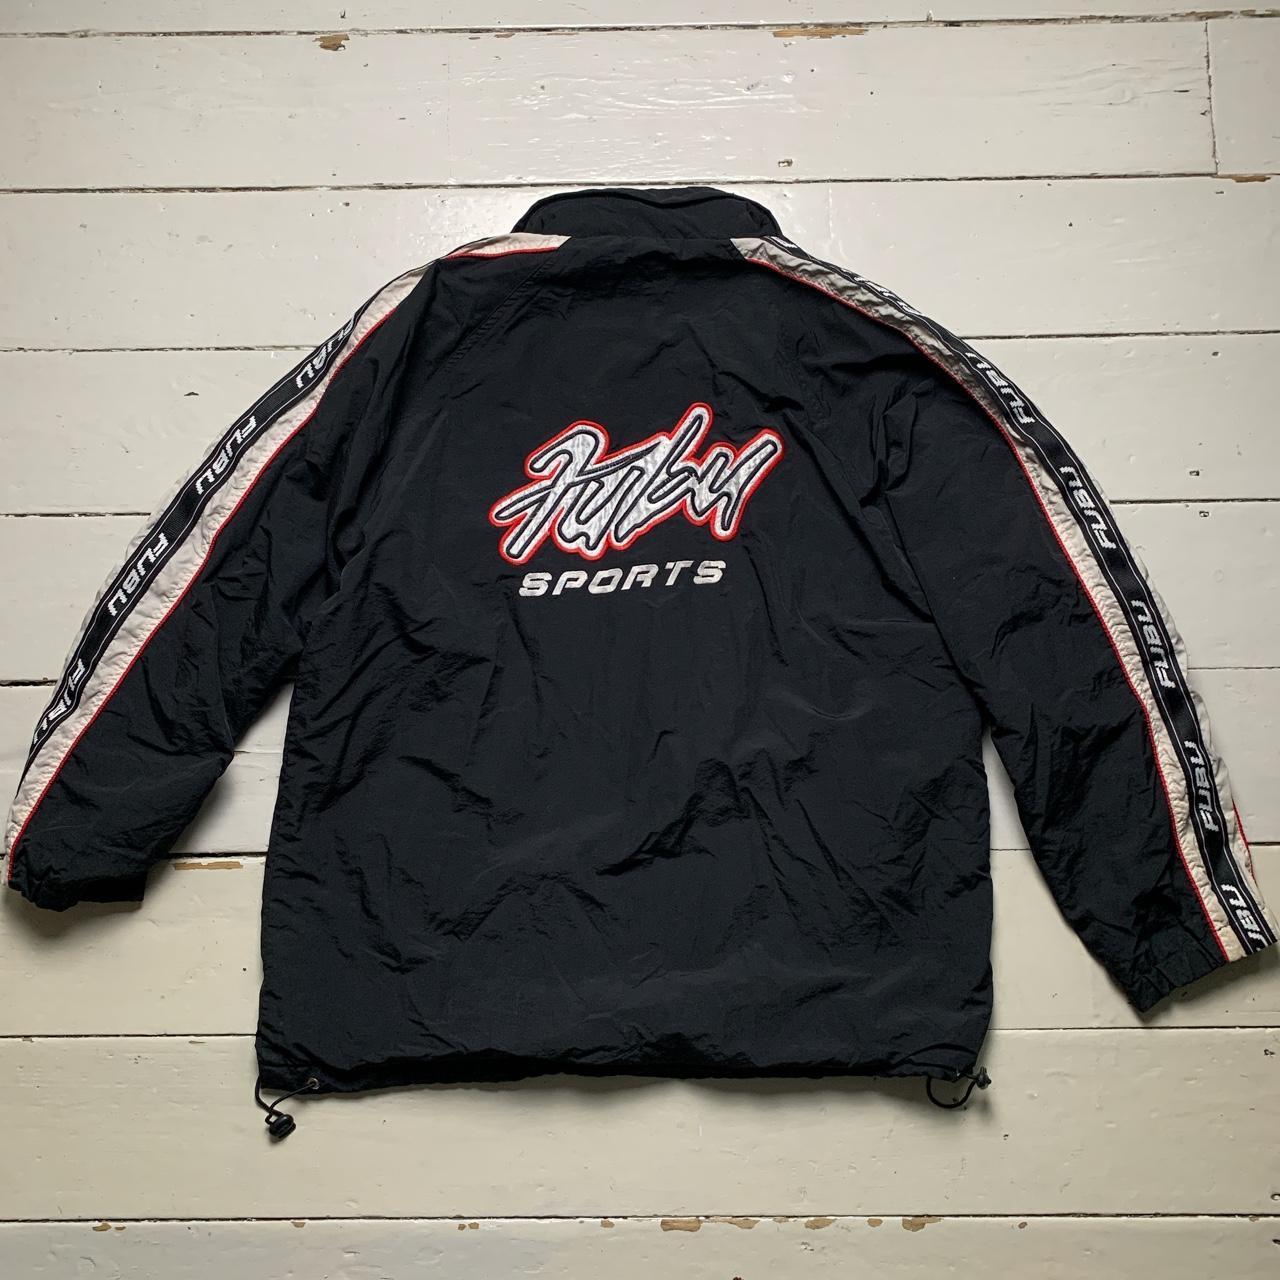 Fubu Sports Vintage Jacket Black White Red